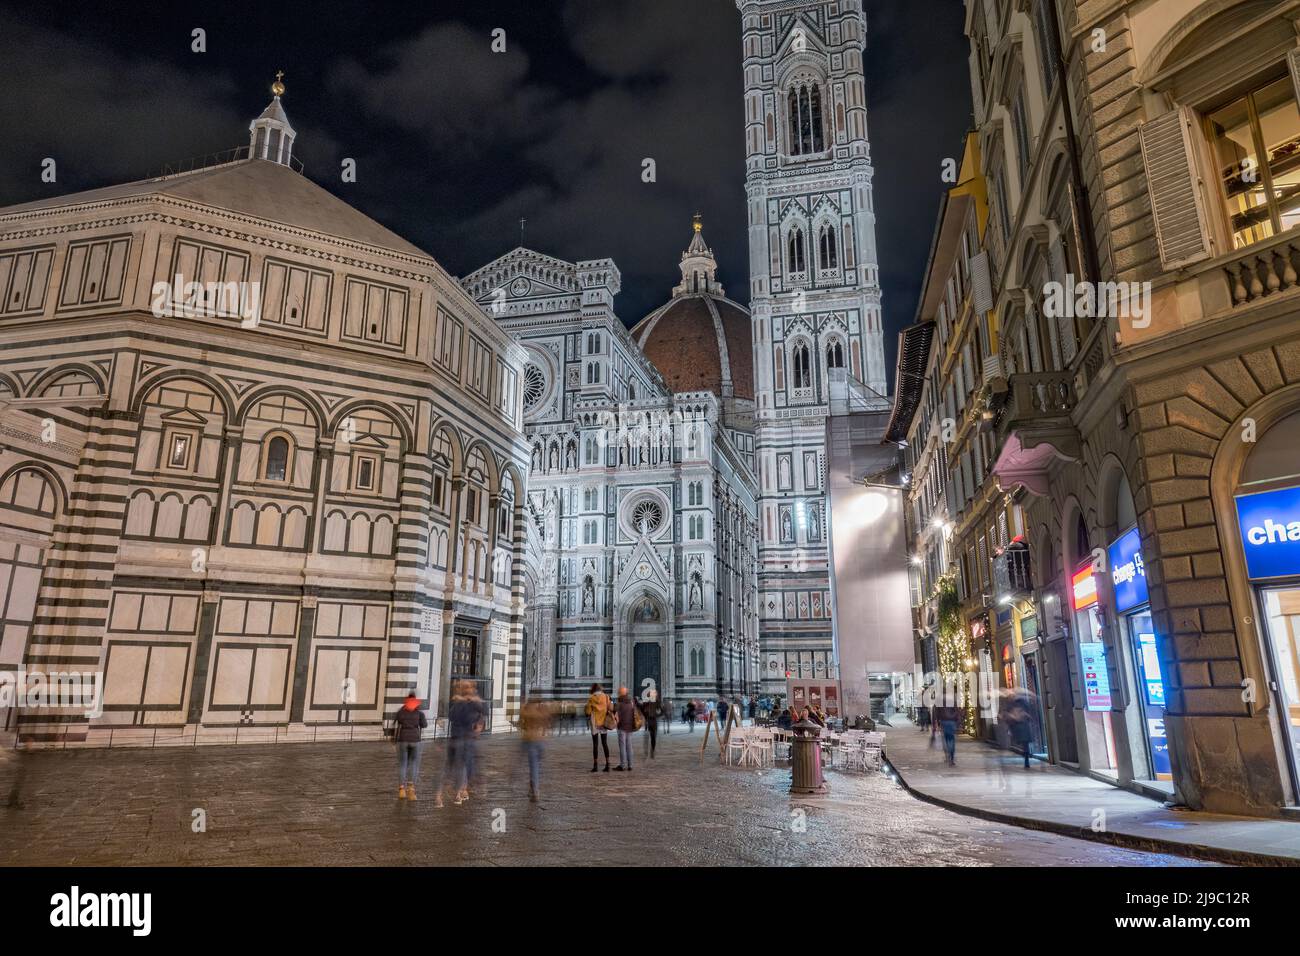 Duomo Santa Maria Del Fiore in Florence Italy closeup street view. Stock Photo